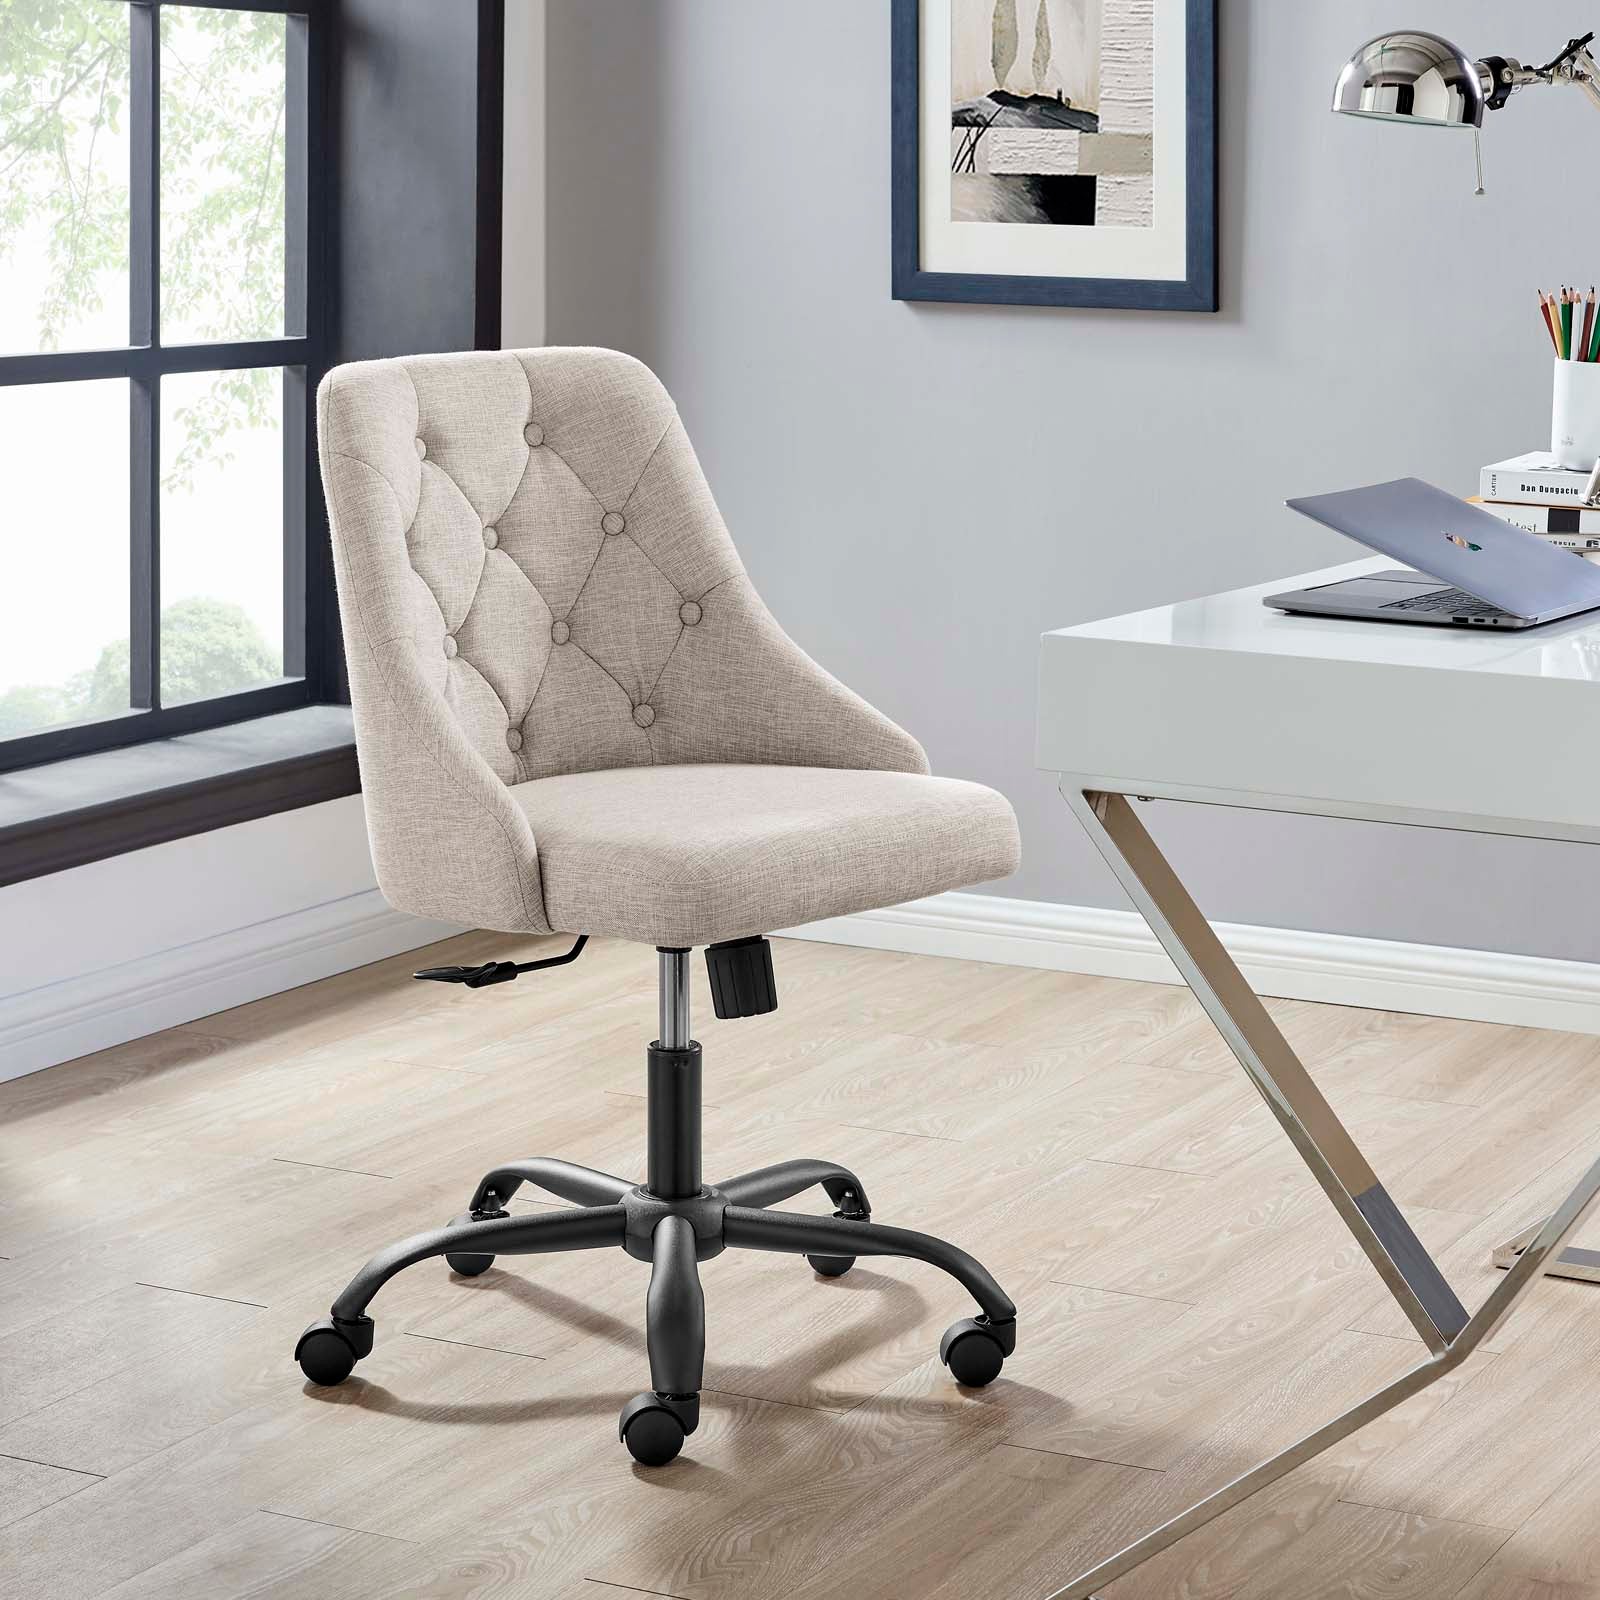 Distinct Tufted Swivel Upholstered Office Chair - East Shore Modern Home Furnishings